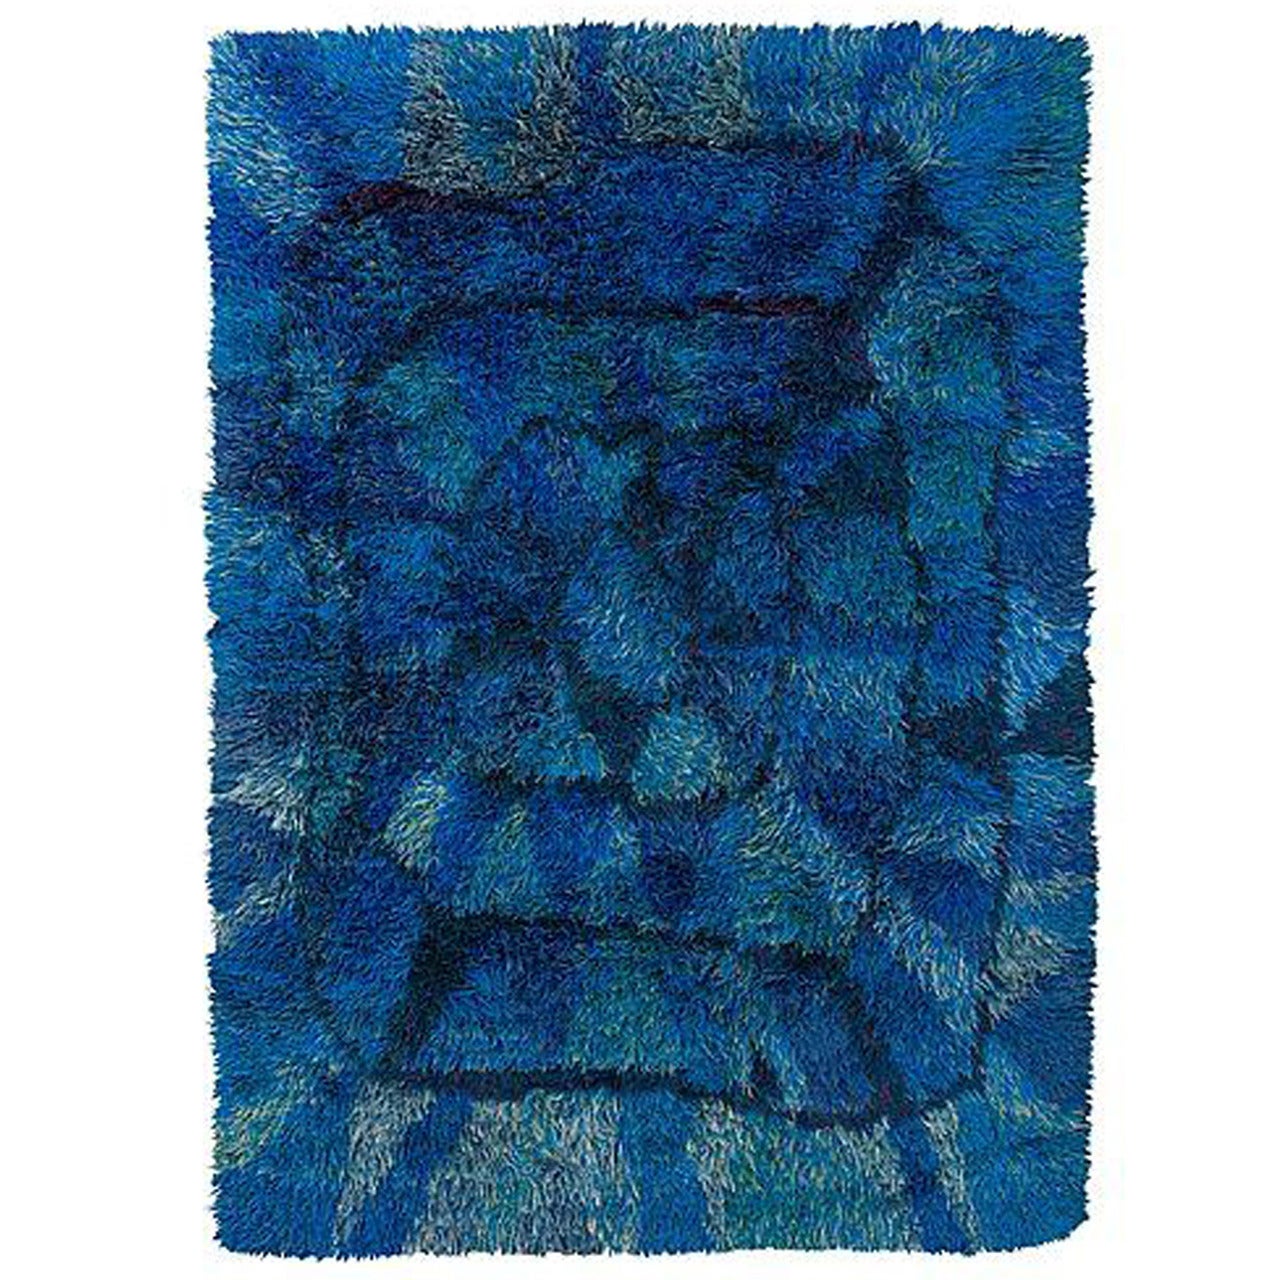 "Blue Moon" Swedish pile carpet Viola Gråsten designed For Sale